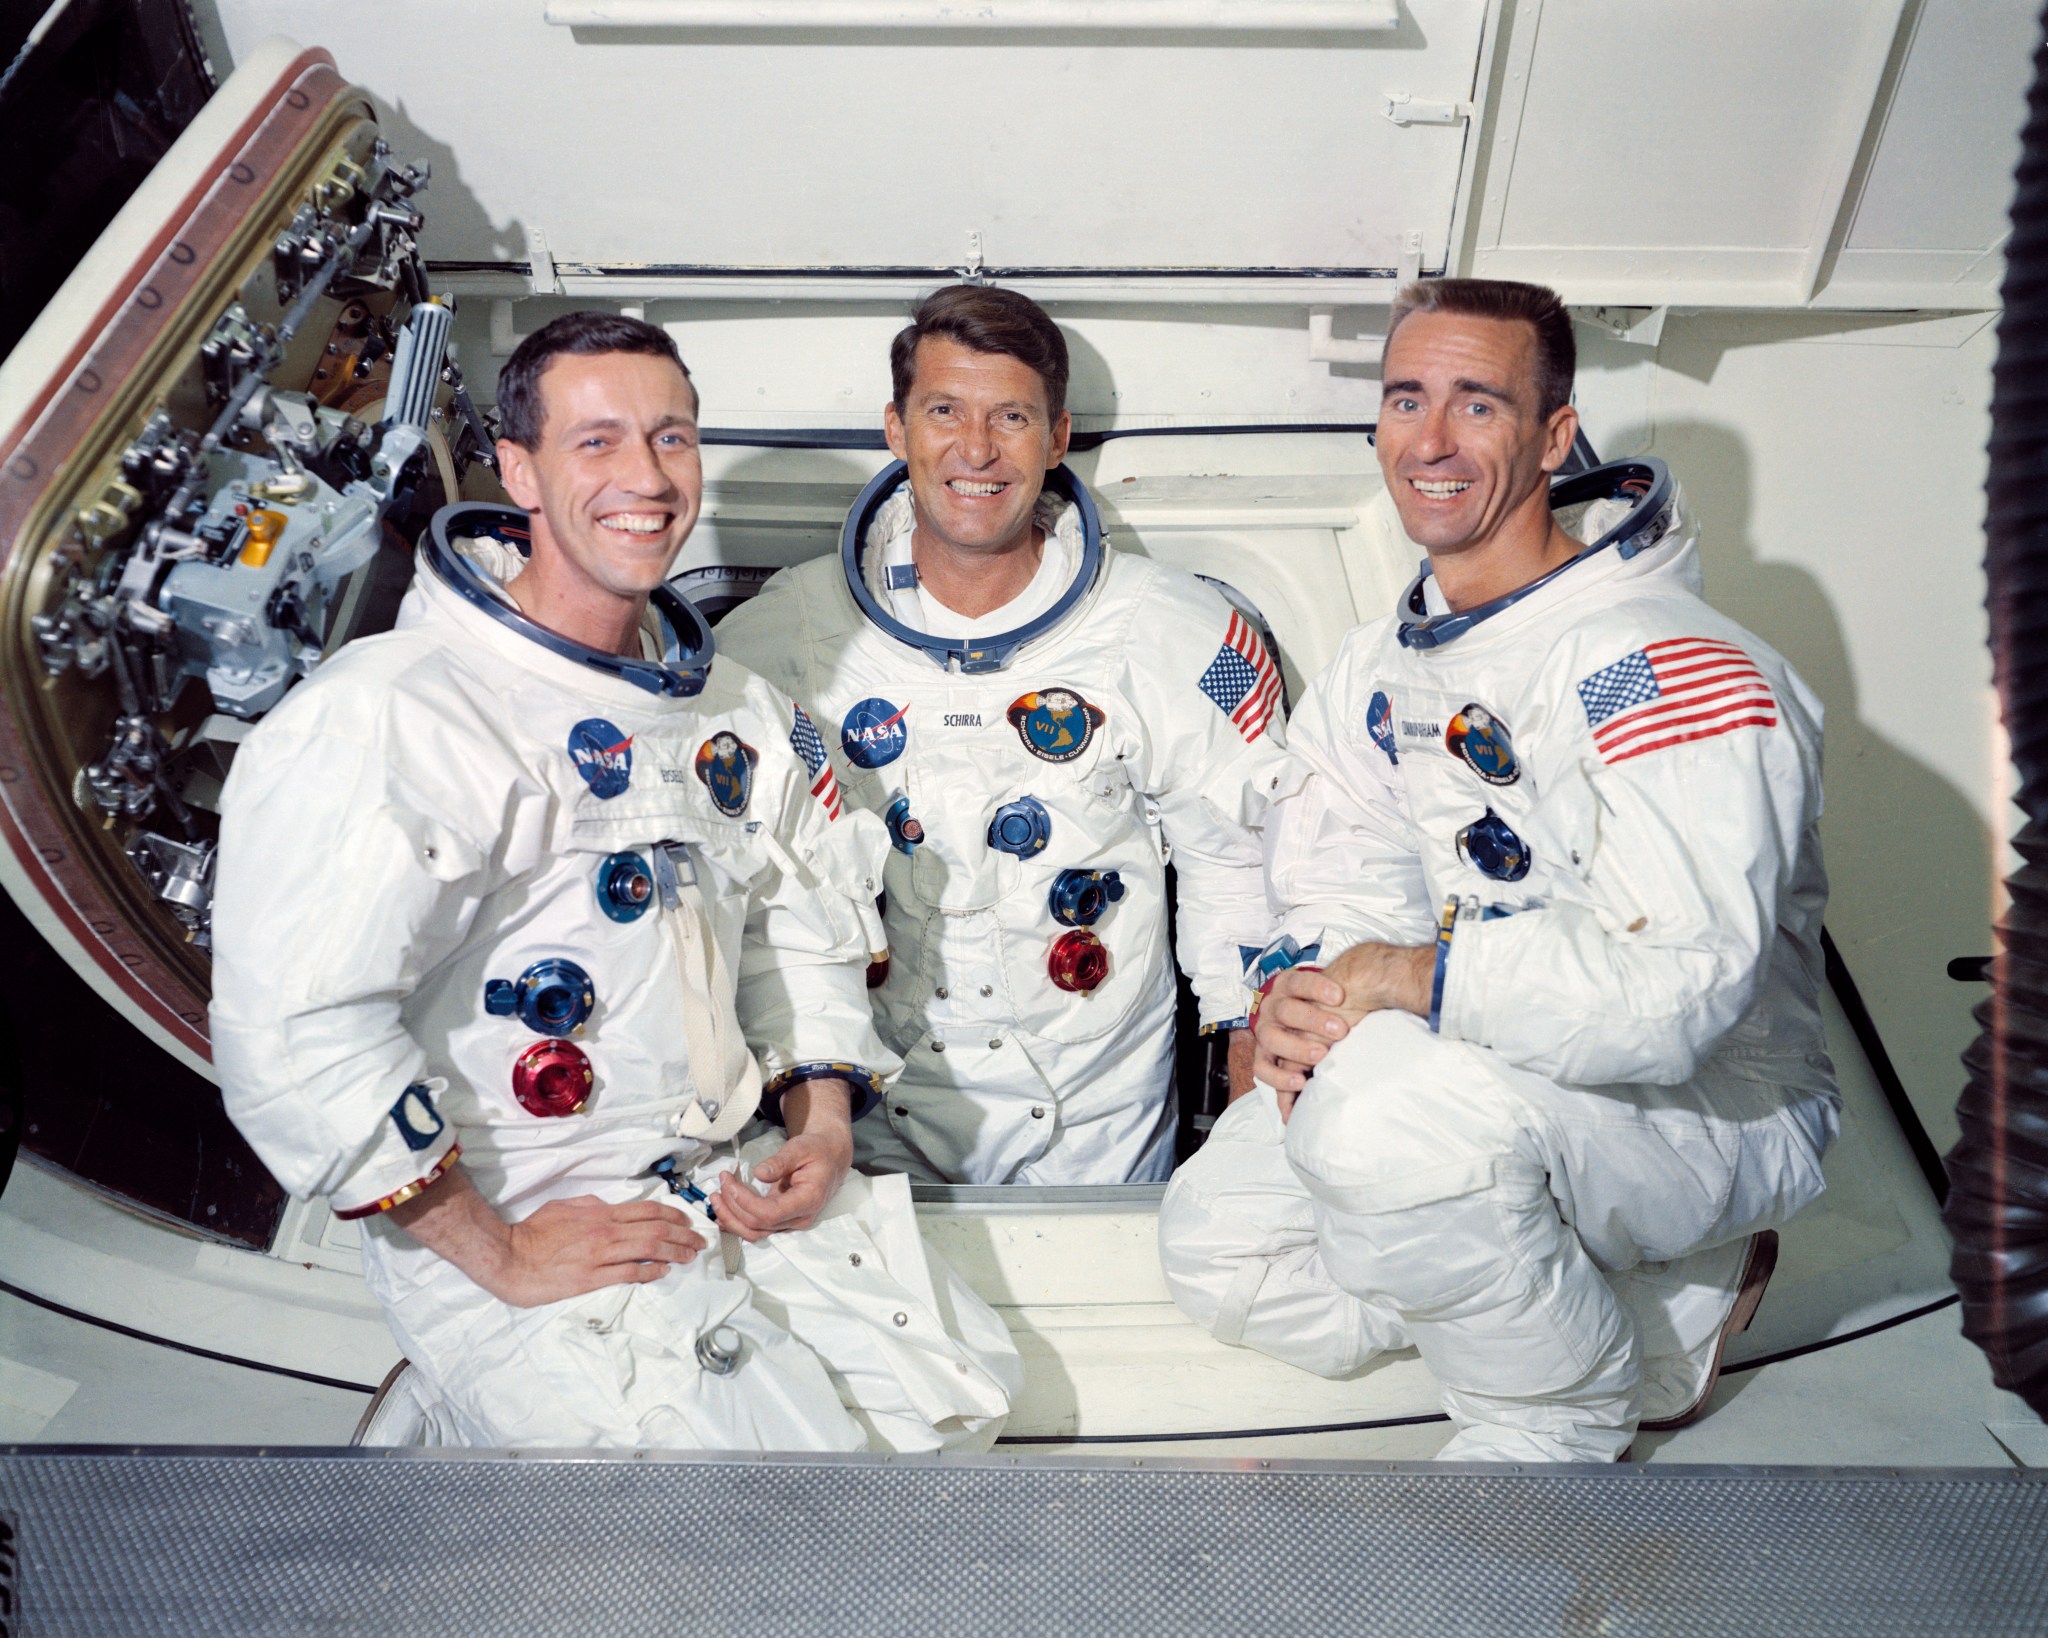 Portrait of three Apollo 7 astronauts in spacesuits